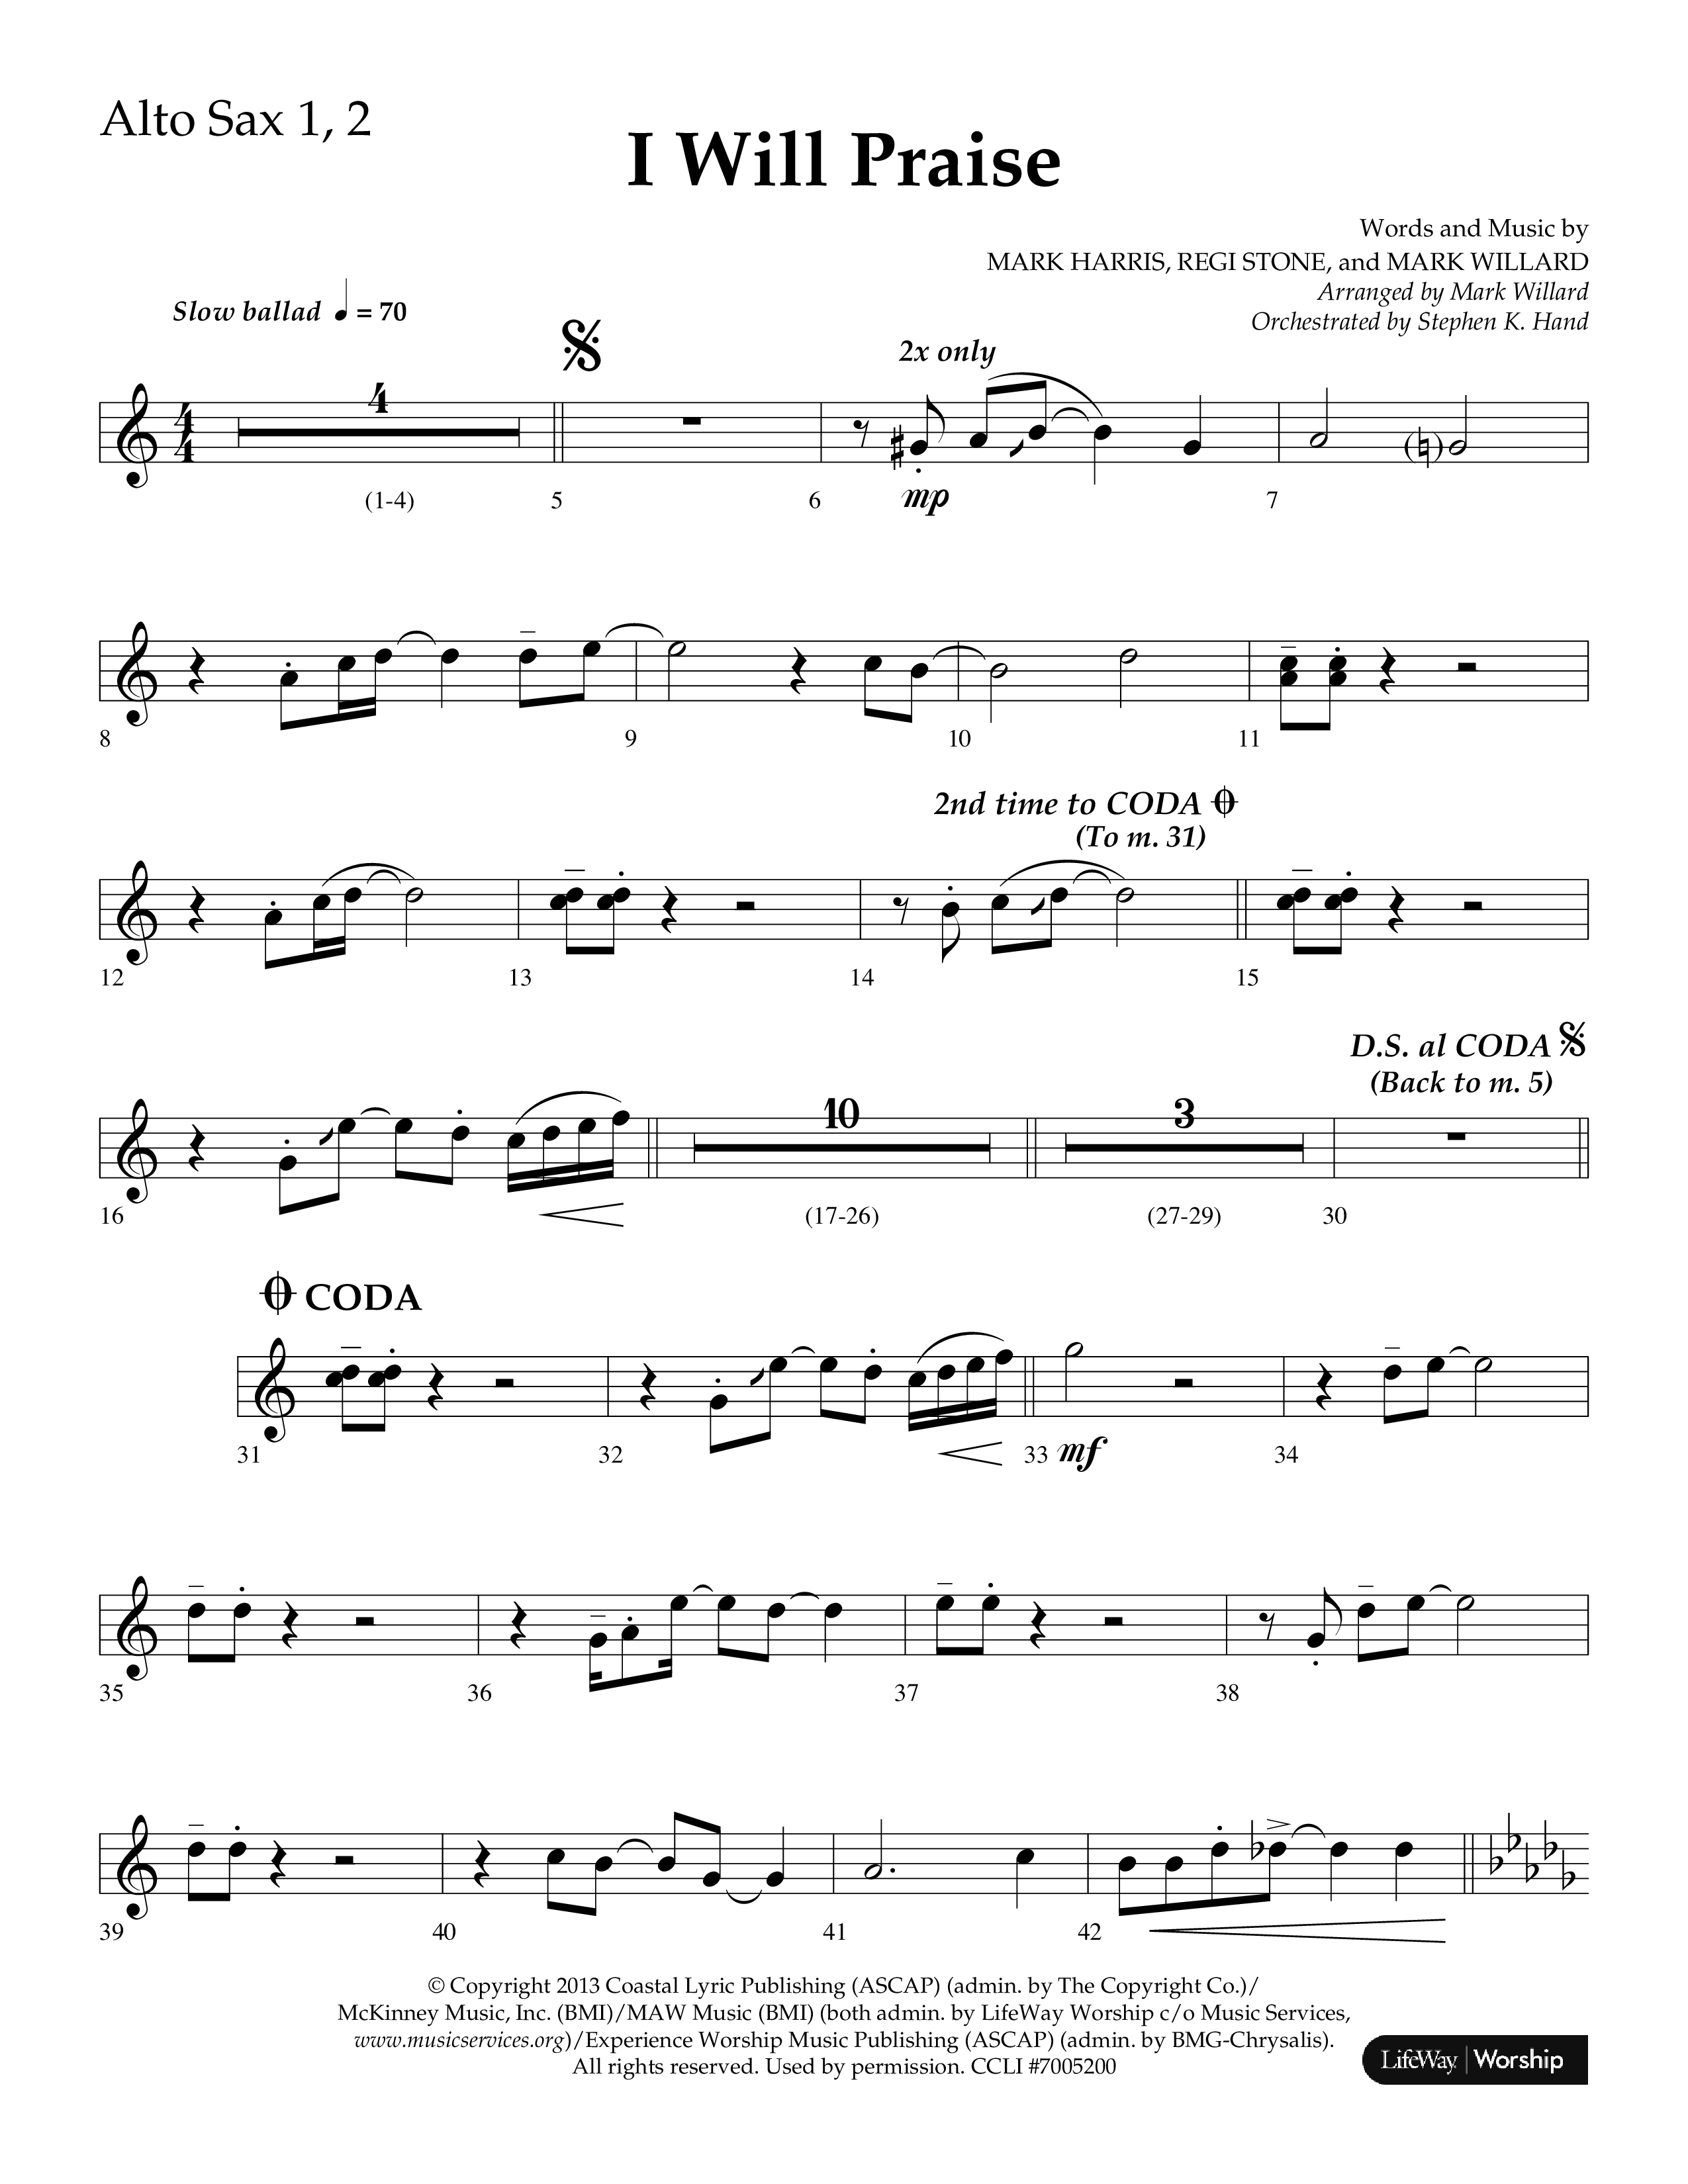 I Will Praise (Choral Anthem SATB) Alto Sax 1/2 (Lifeway Choral / Arr. Mark Willard / Orch. Stephen K. Hand)